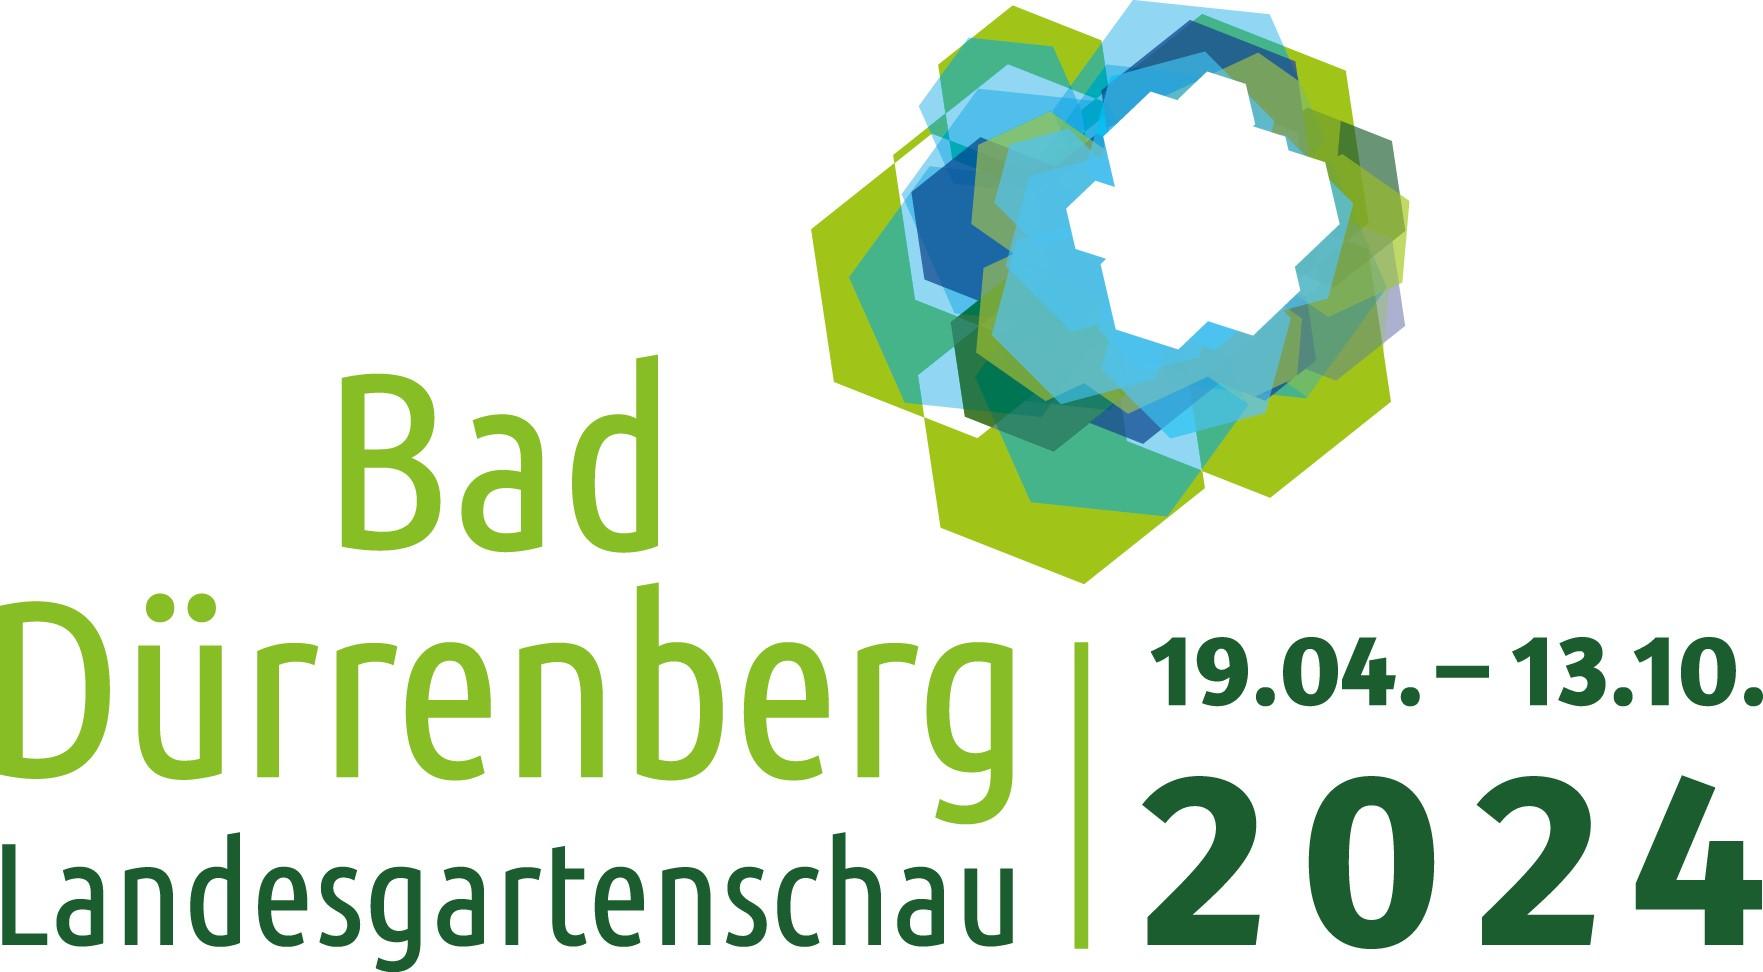 Landesgartenschau Bad Dürrenberg 2023 gGmbH